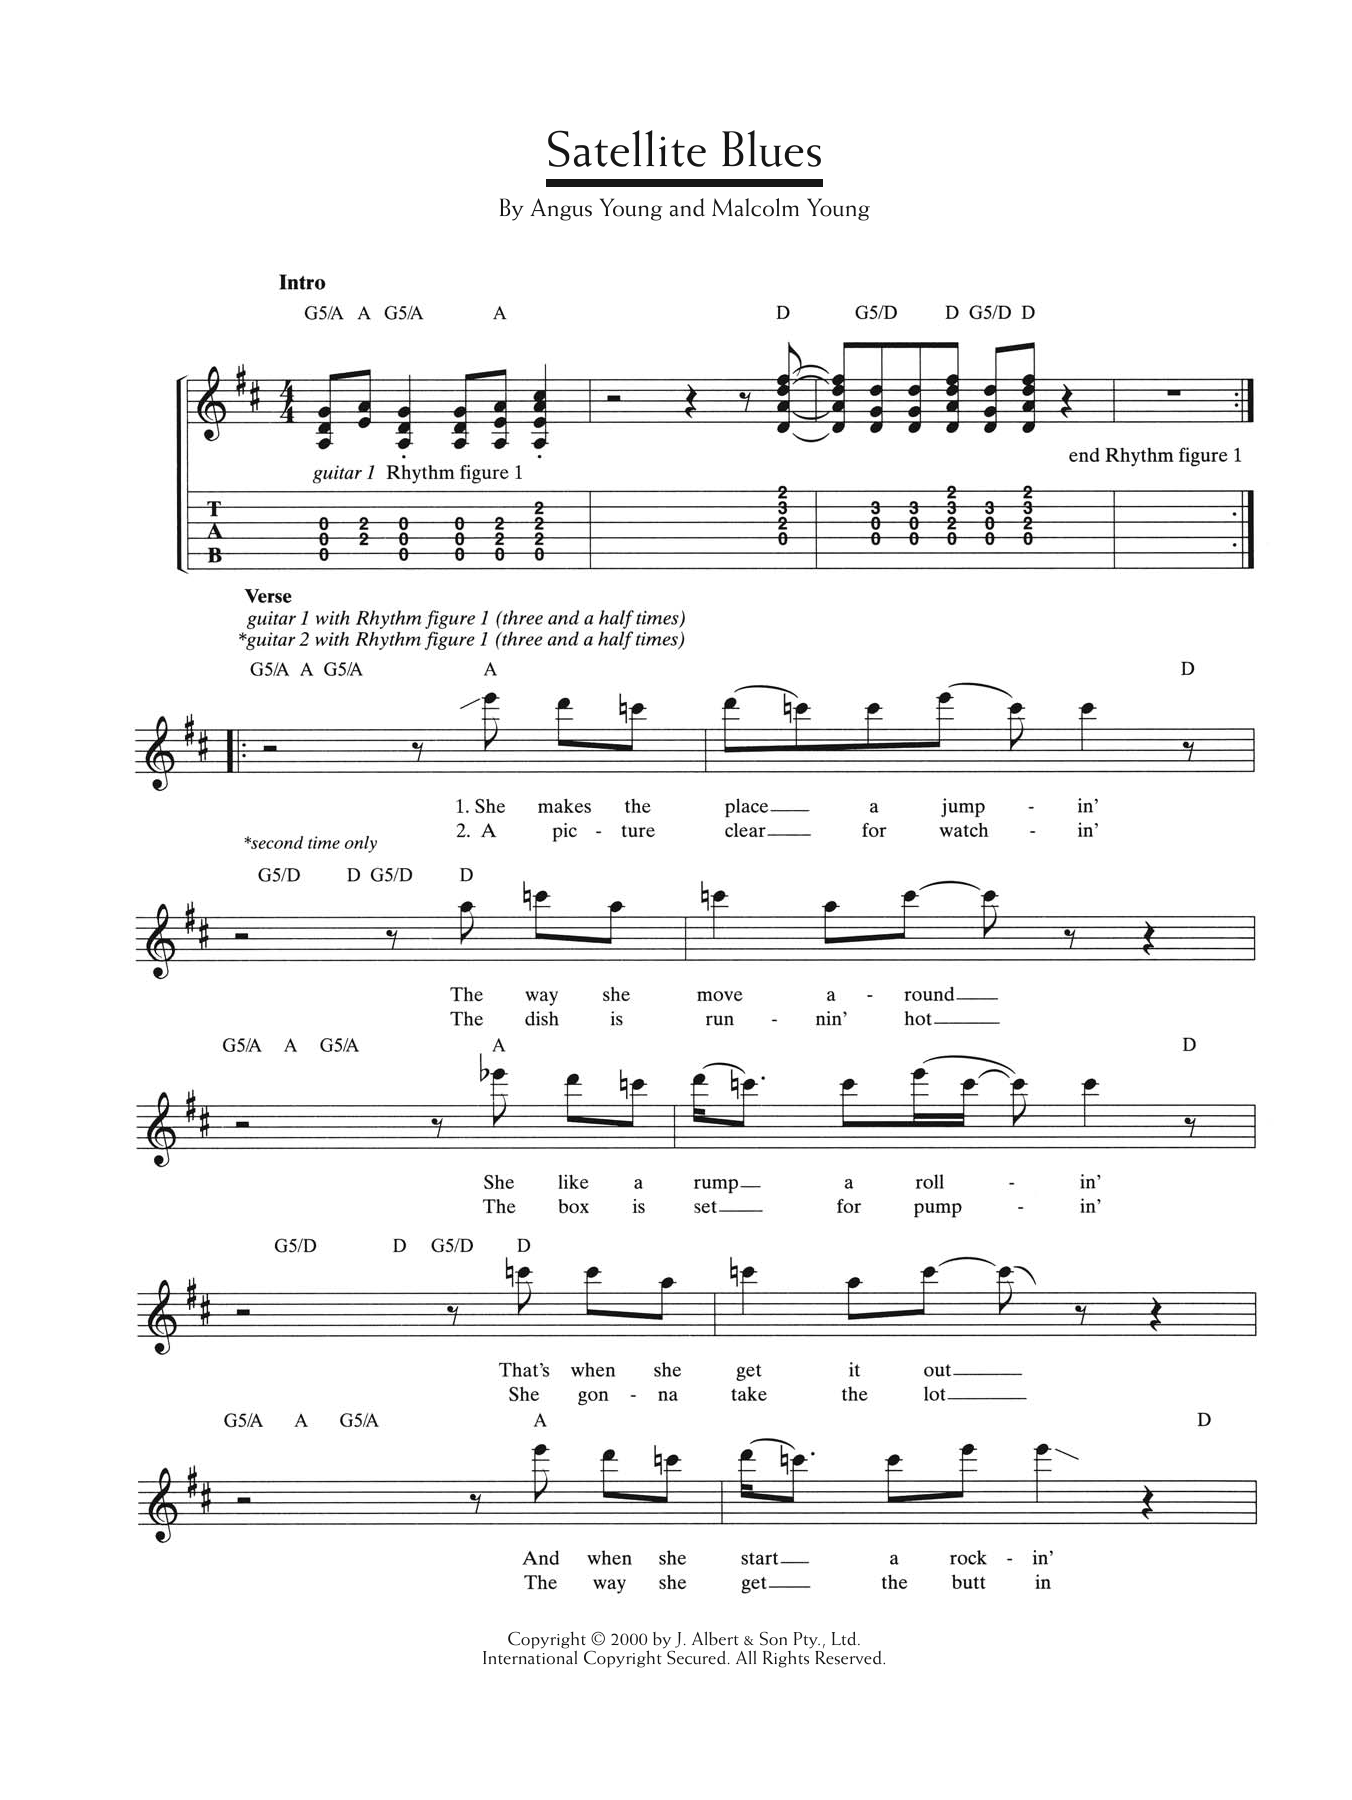 AC/DC Satellite Blues sheet music notes and chords arranged for Guitar Chords/Lyrics